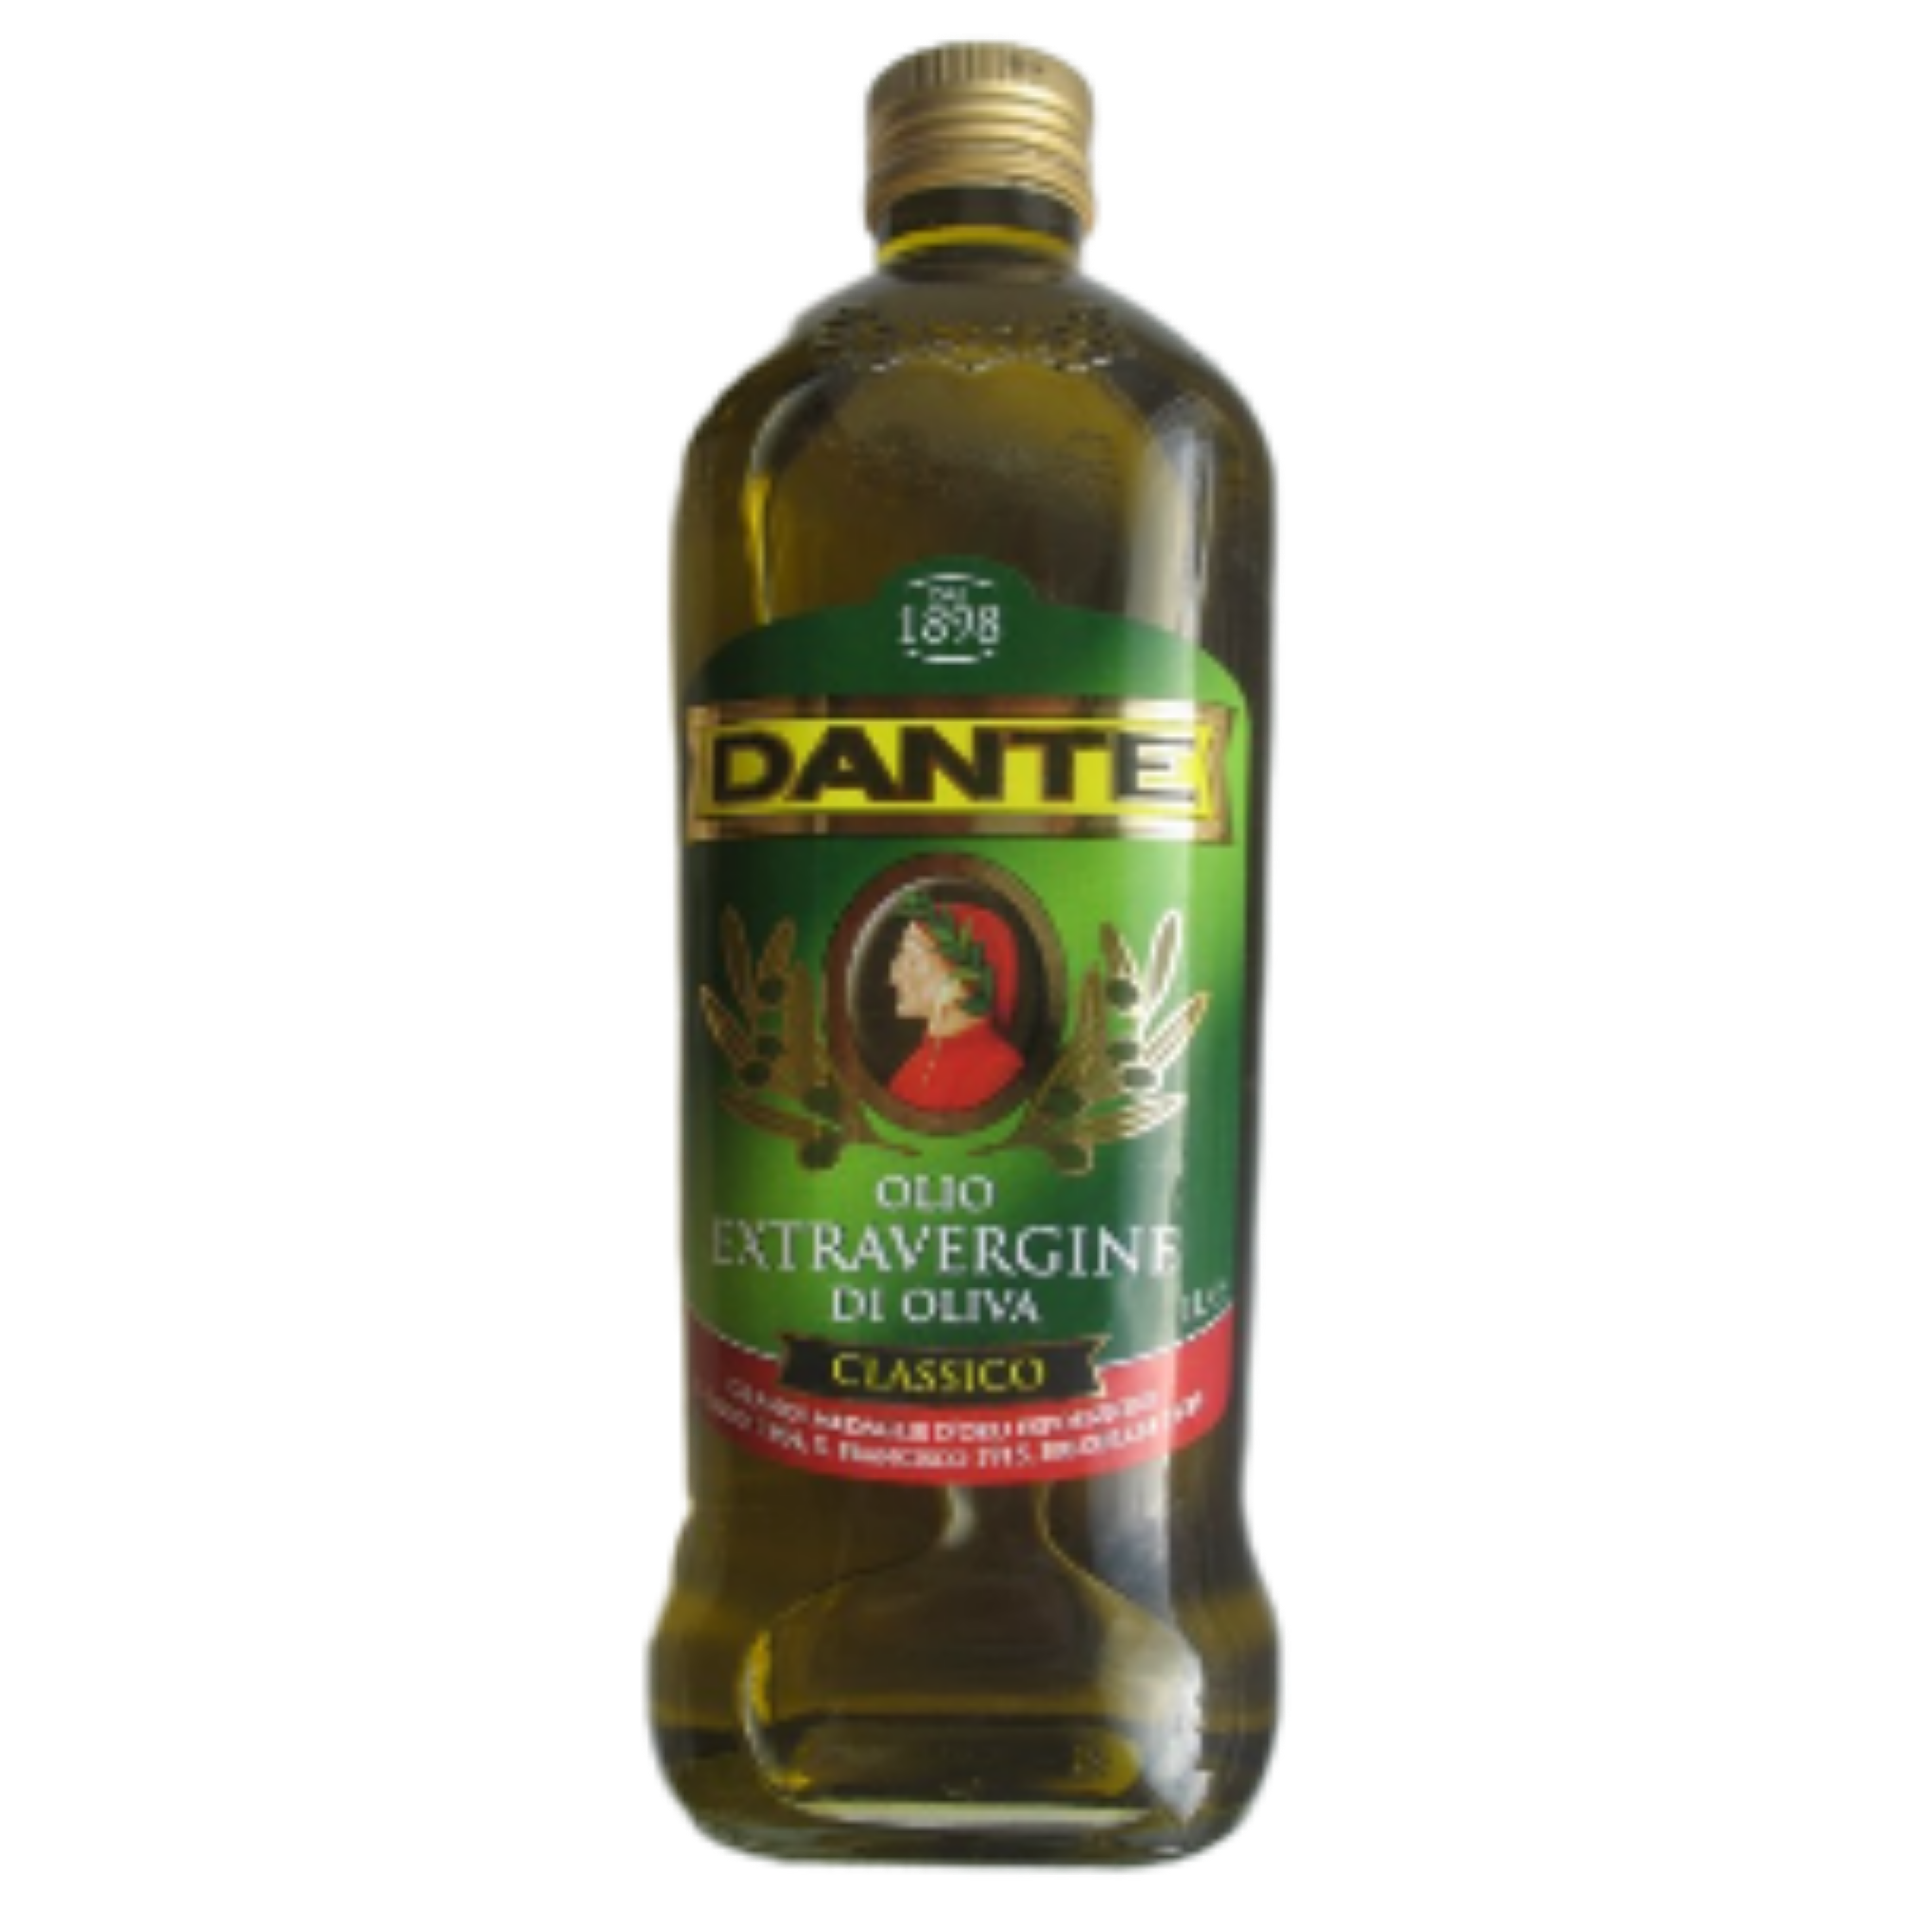 Dante Olive Oils